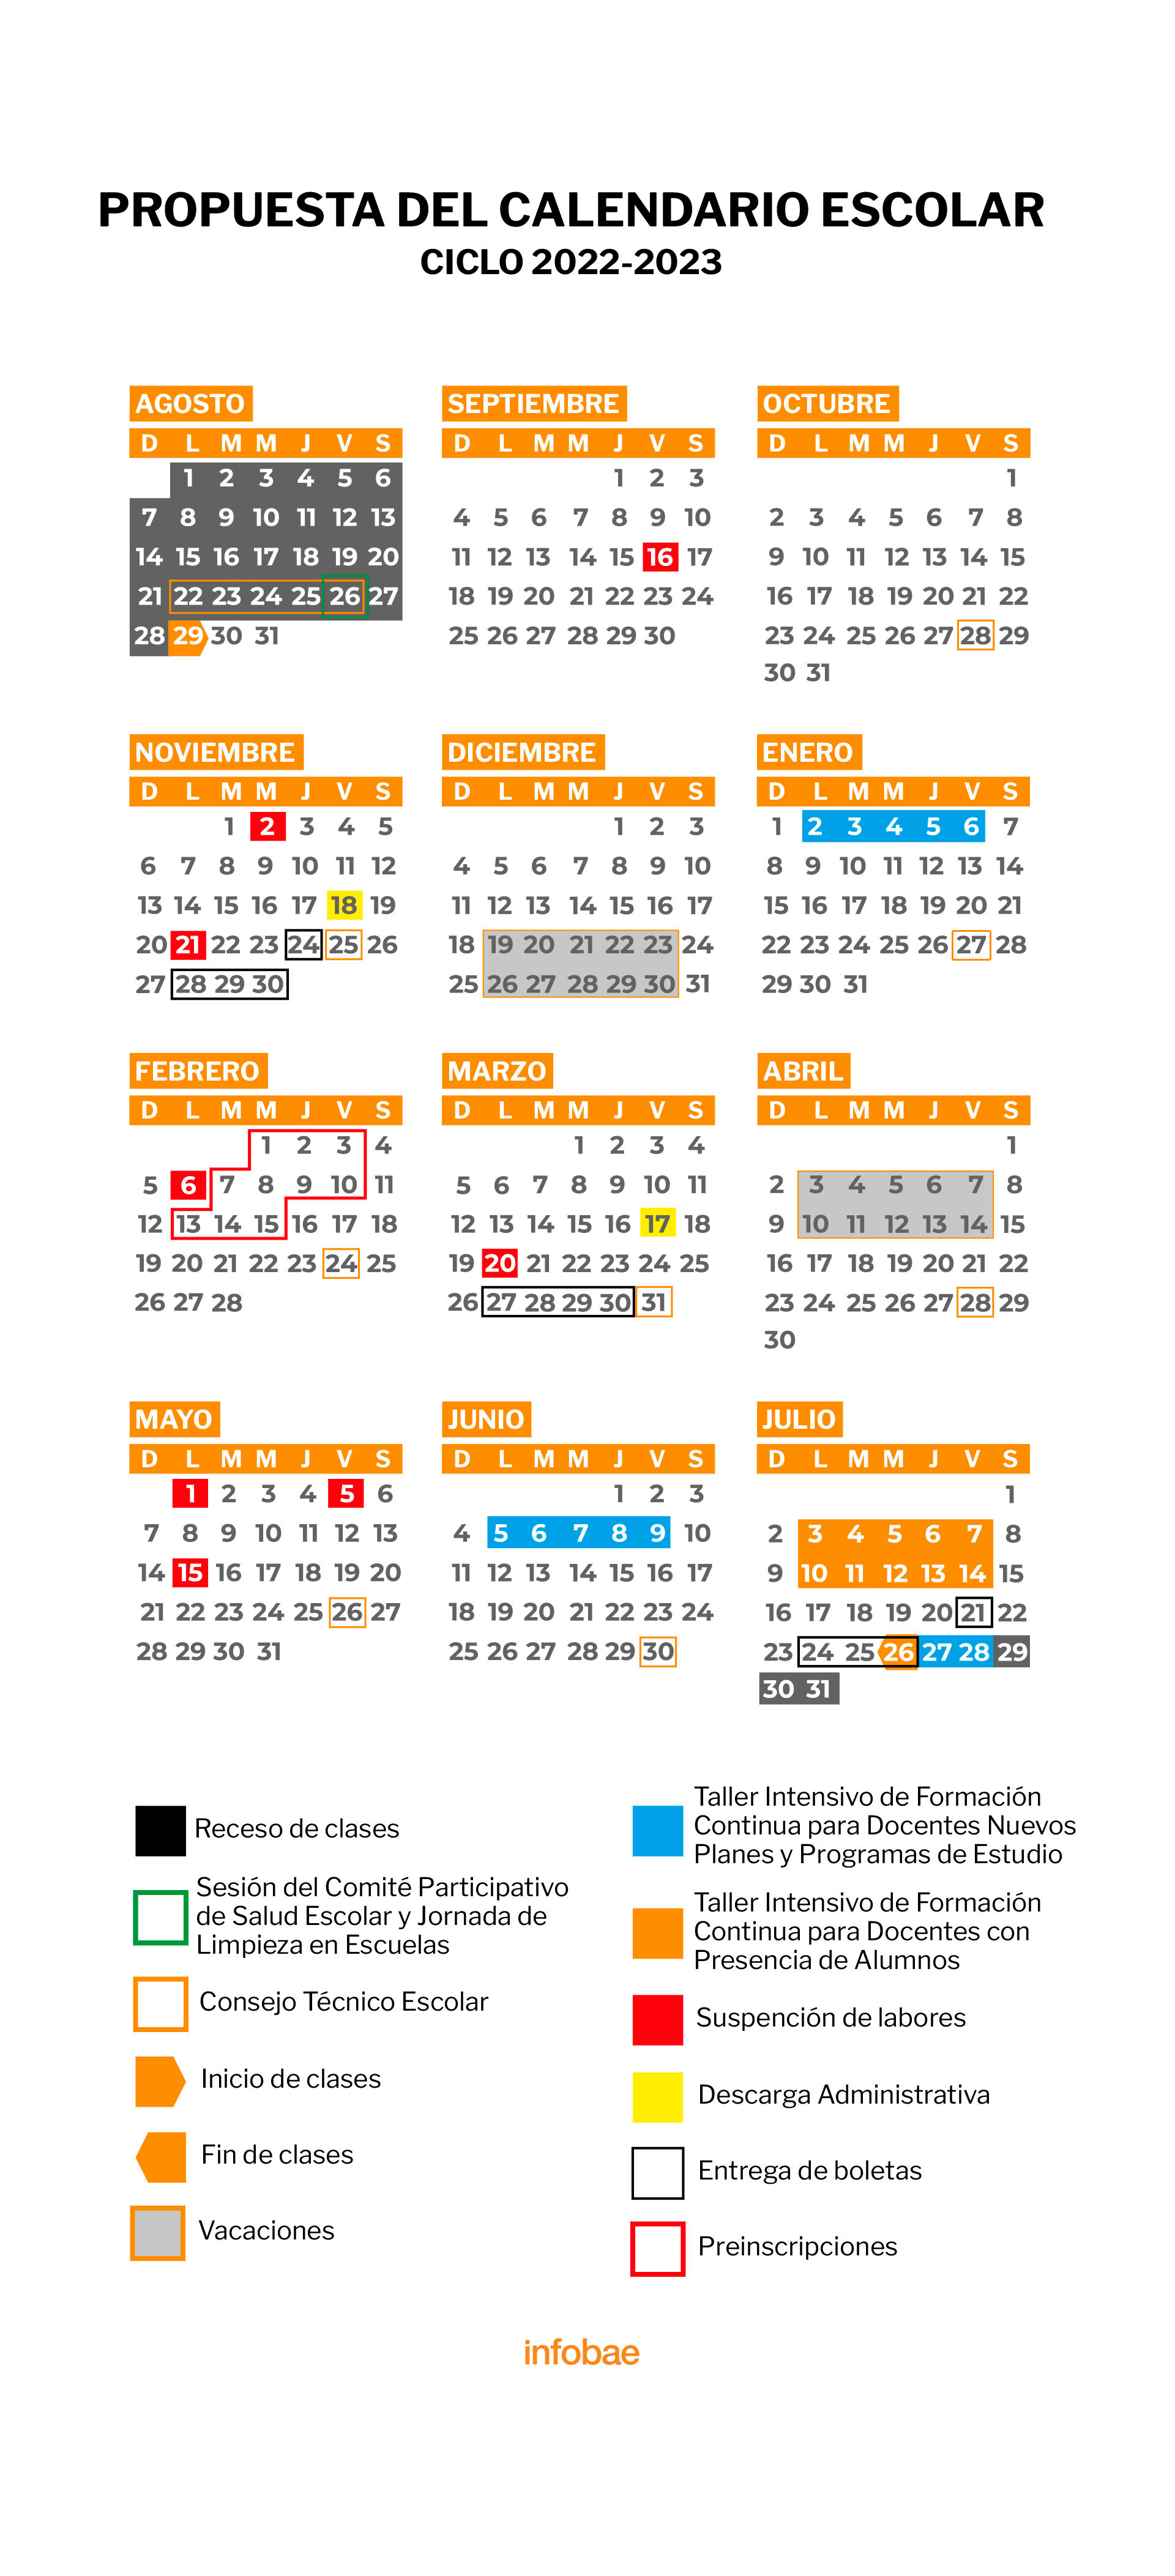 Calendario Oficial de la SEP 2022-2023 (Infobae)